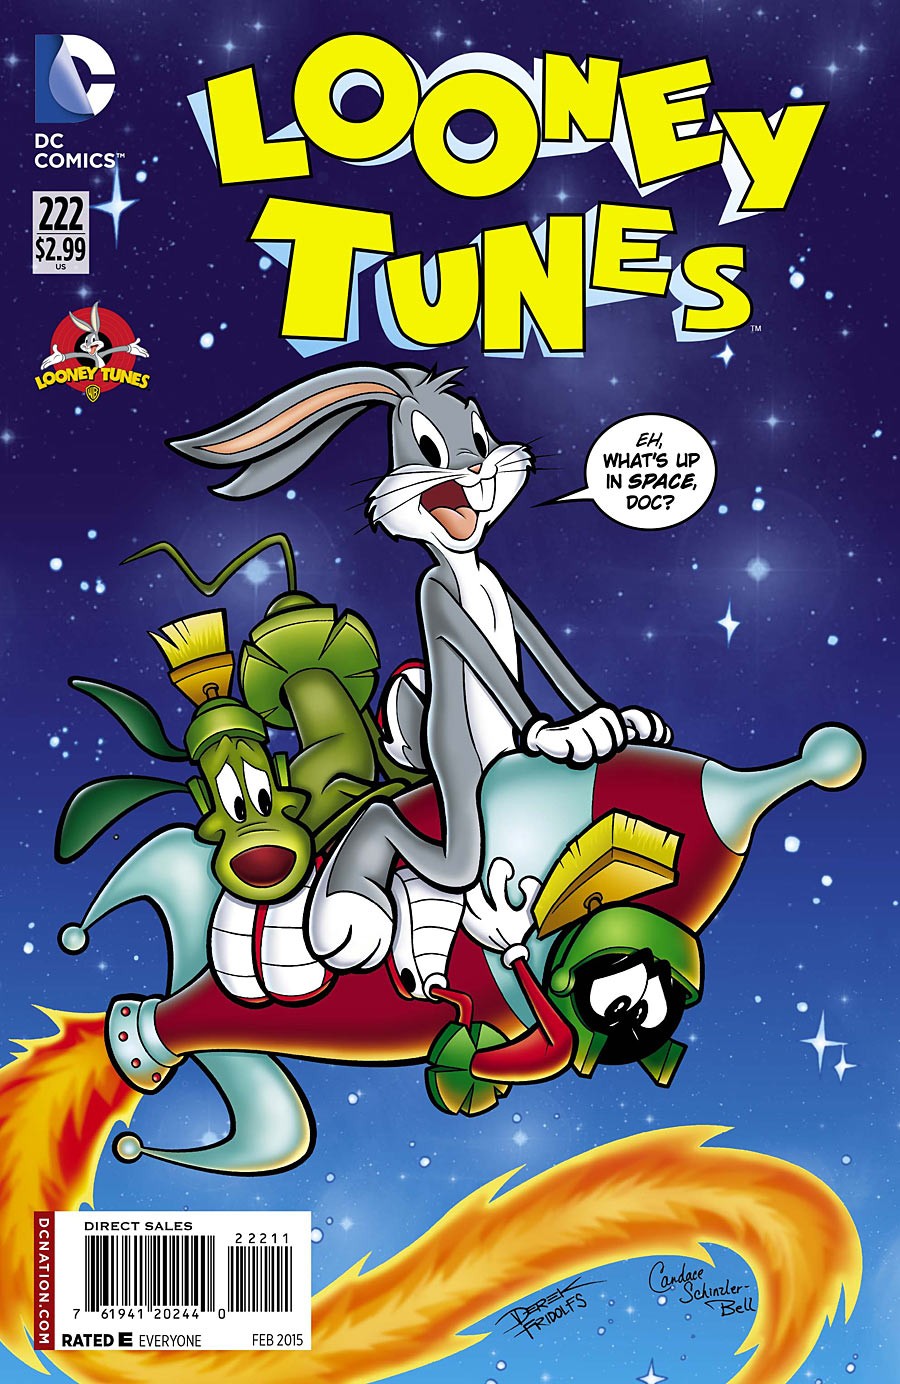 Looney Tunes Vol. 1 #222